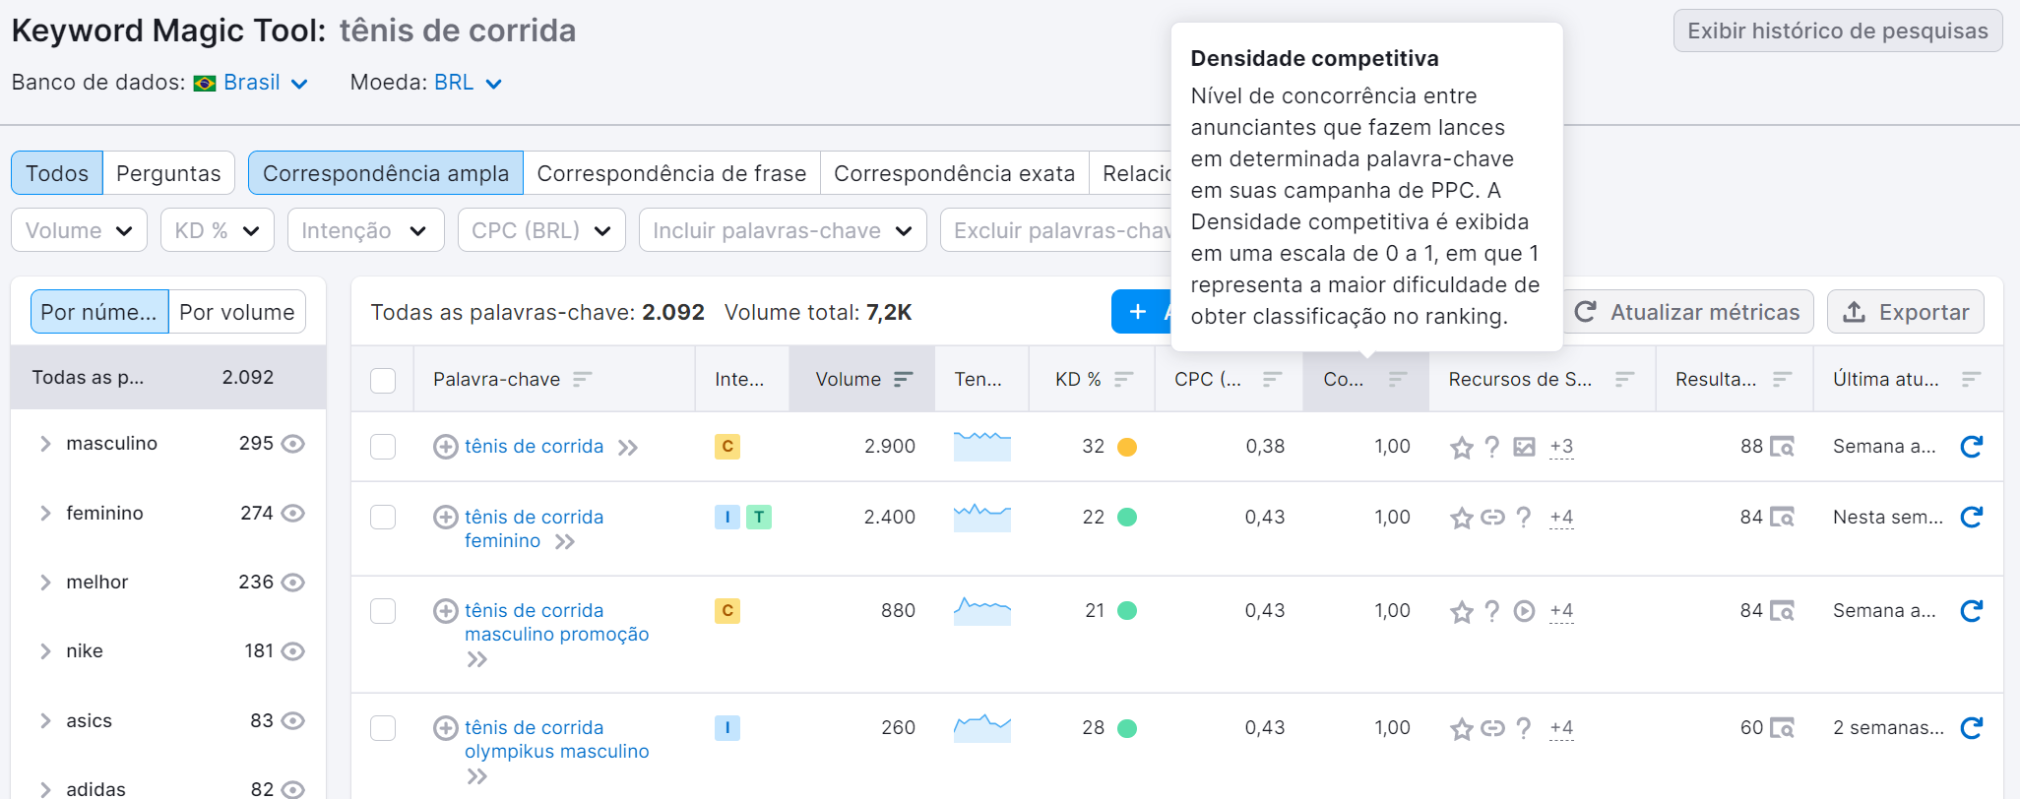 search engine marketing - coluna densidade competitivana ferramenta keyword magic tool